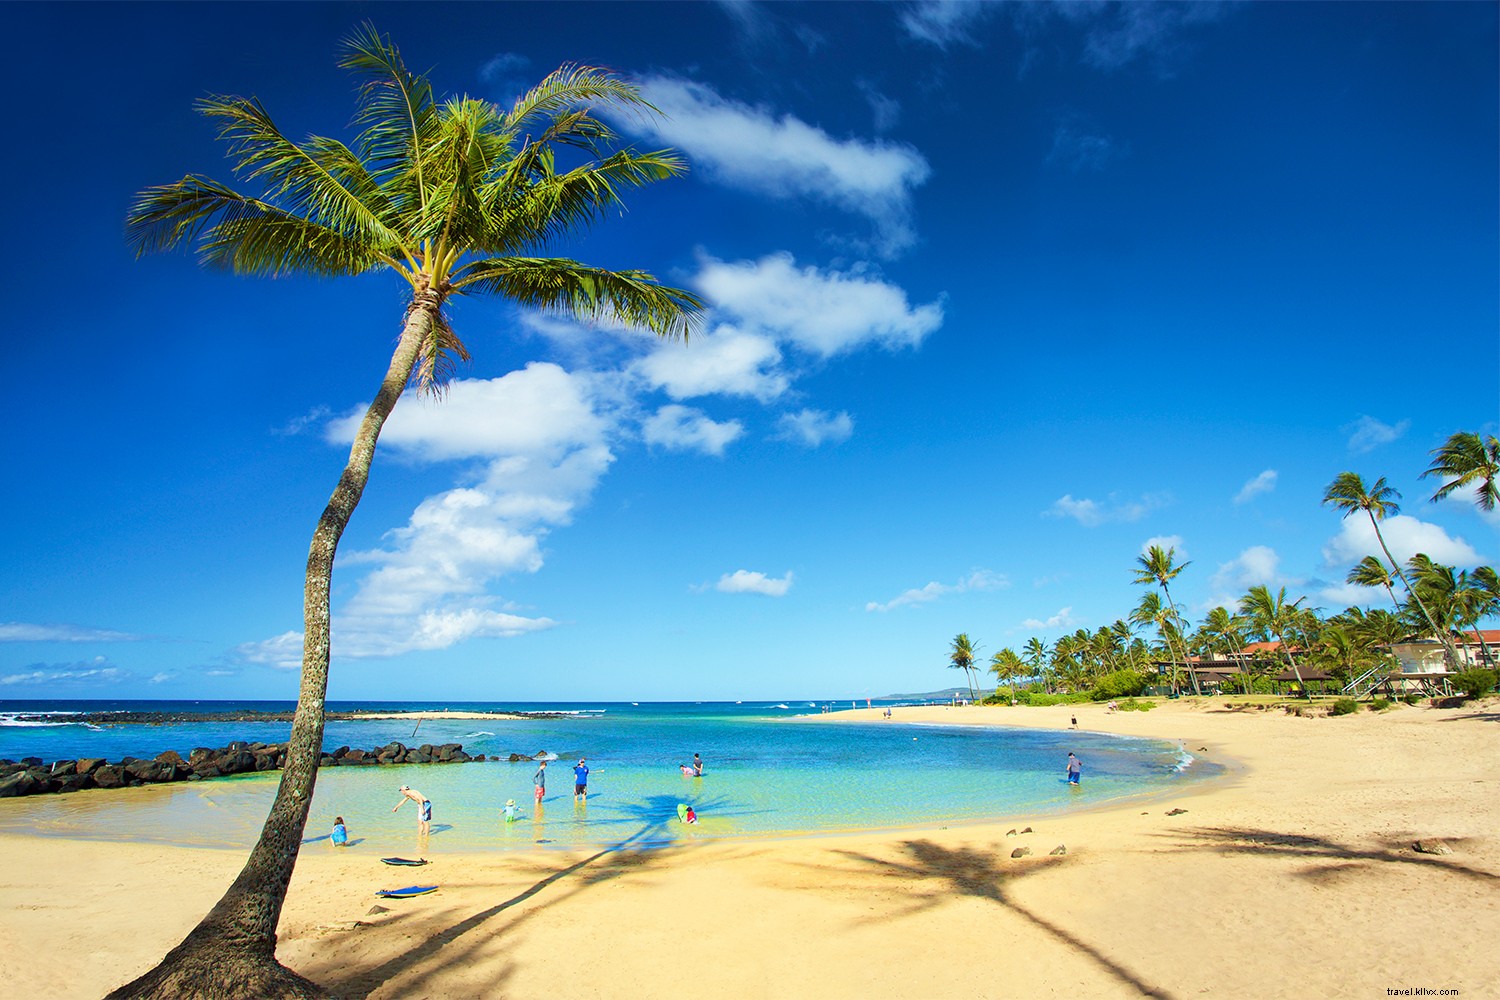 Il modo giusto per visitare Kauai:tenerti al sicuro, Mantenere Kauai al sicuro 